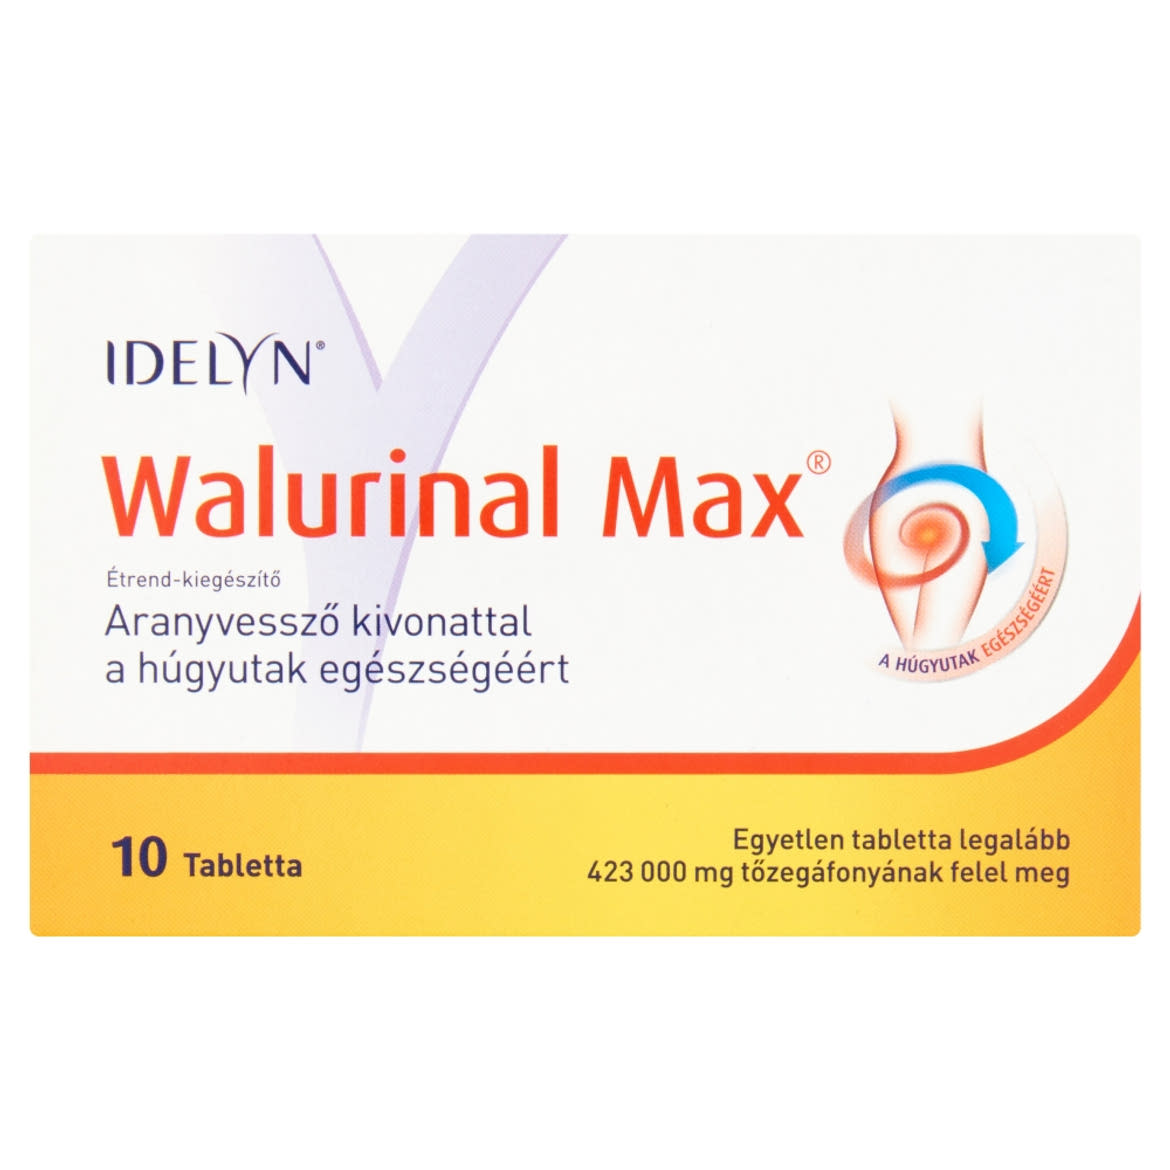 Idelyn Walurinal Max Ã©trend-kiegÃ©szÃ­tÅ‘ tabletta aranyvesszÅ‘ kivonattal